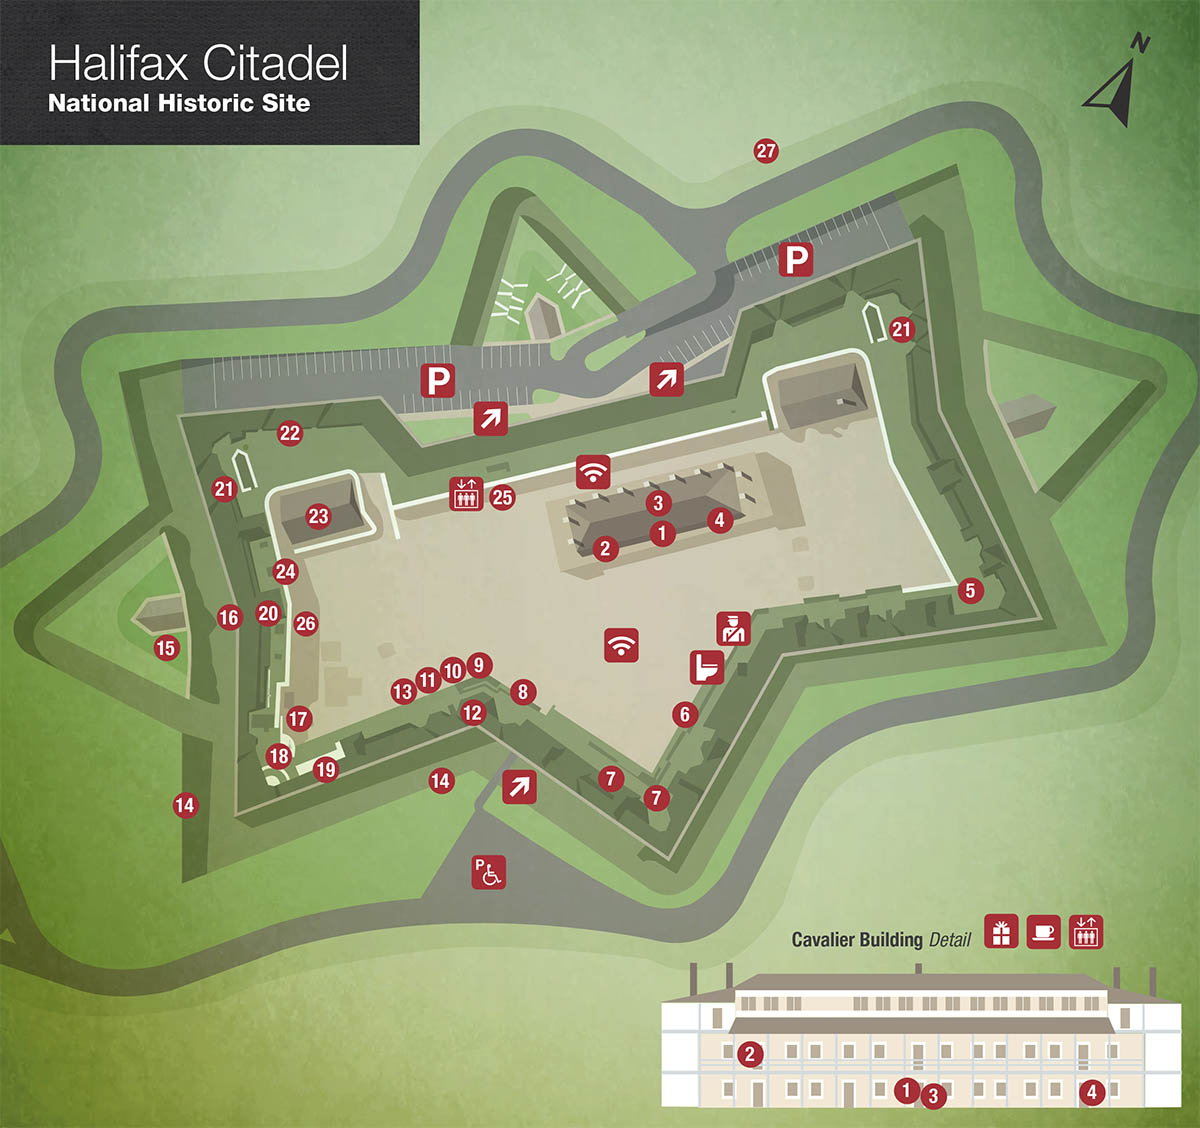 Map of Halifax Citadel